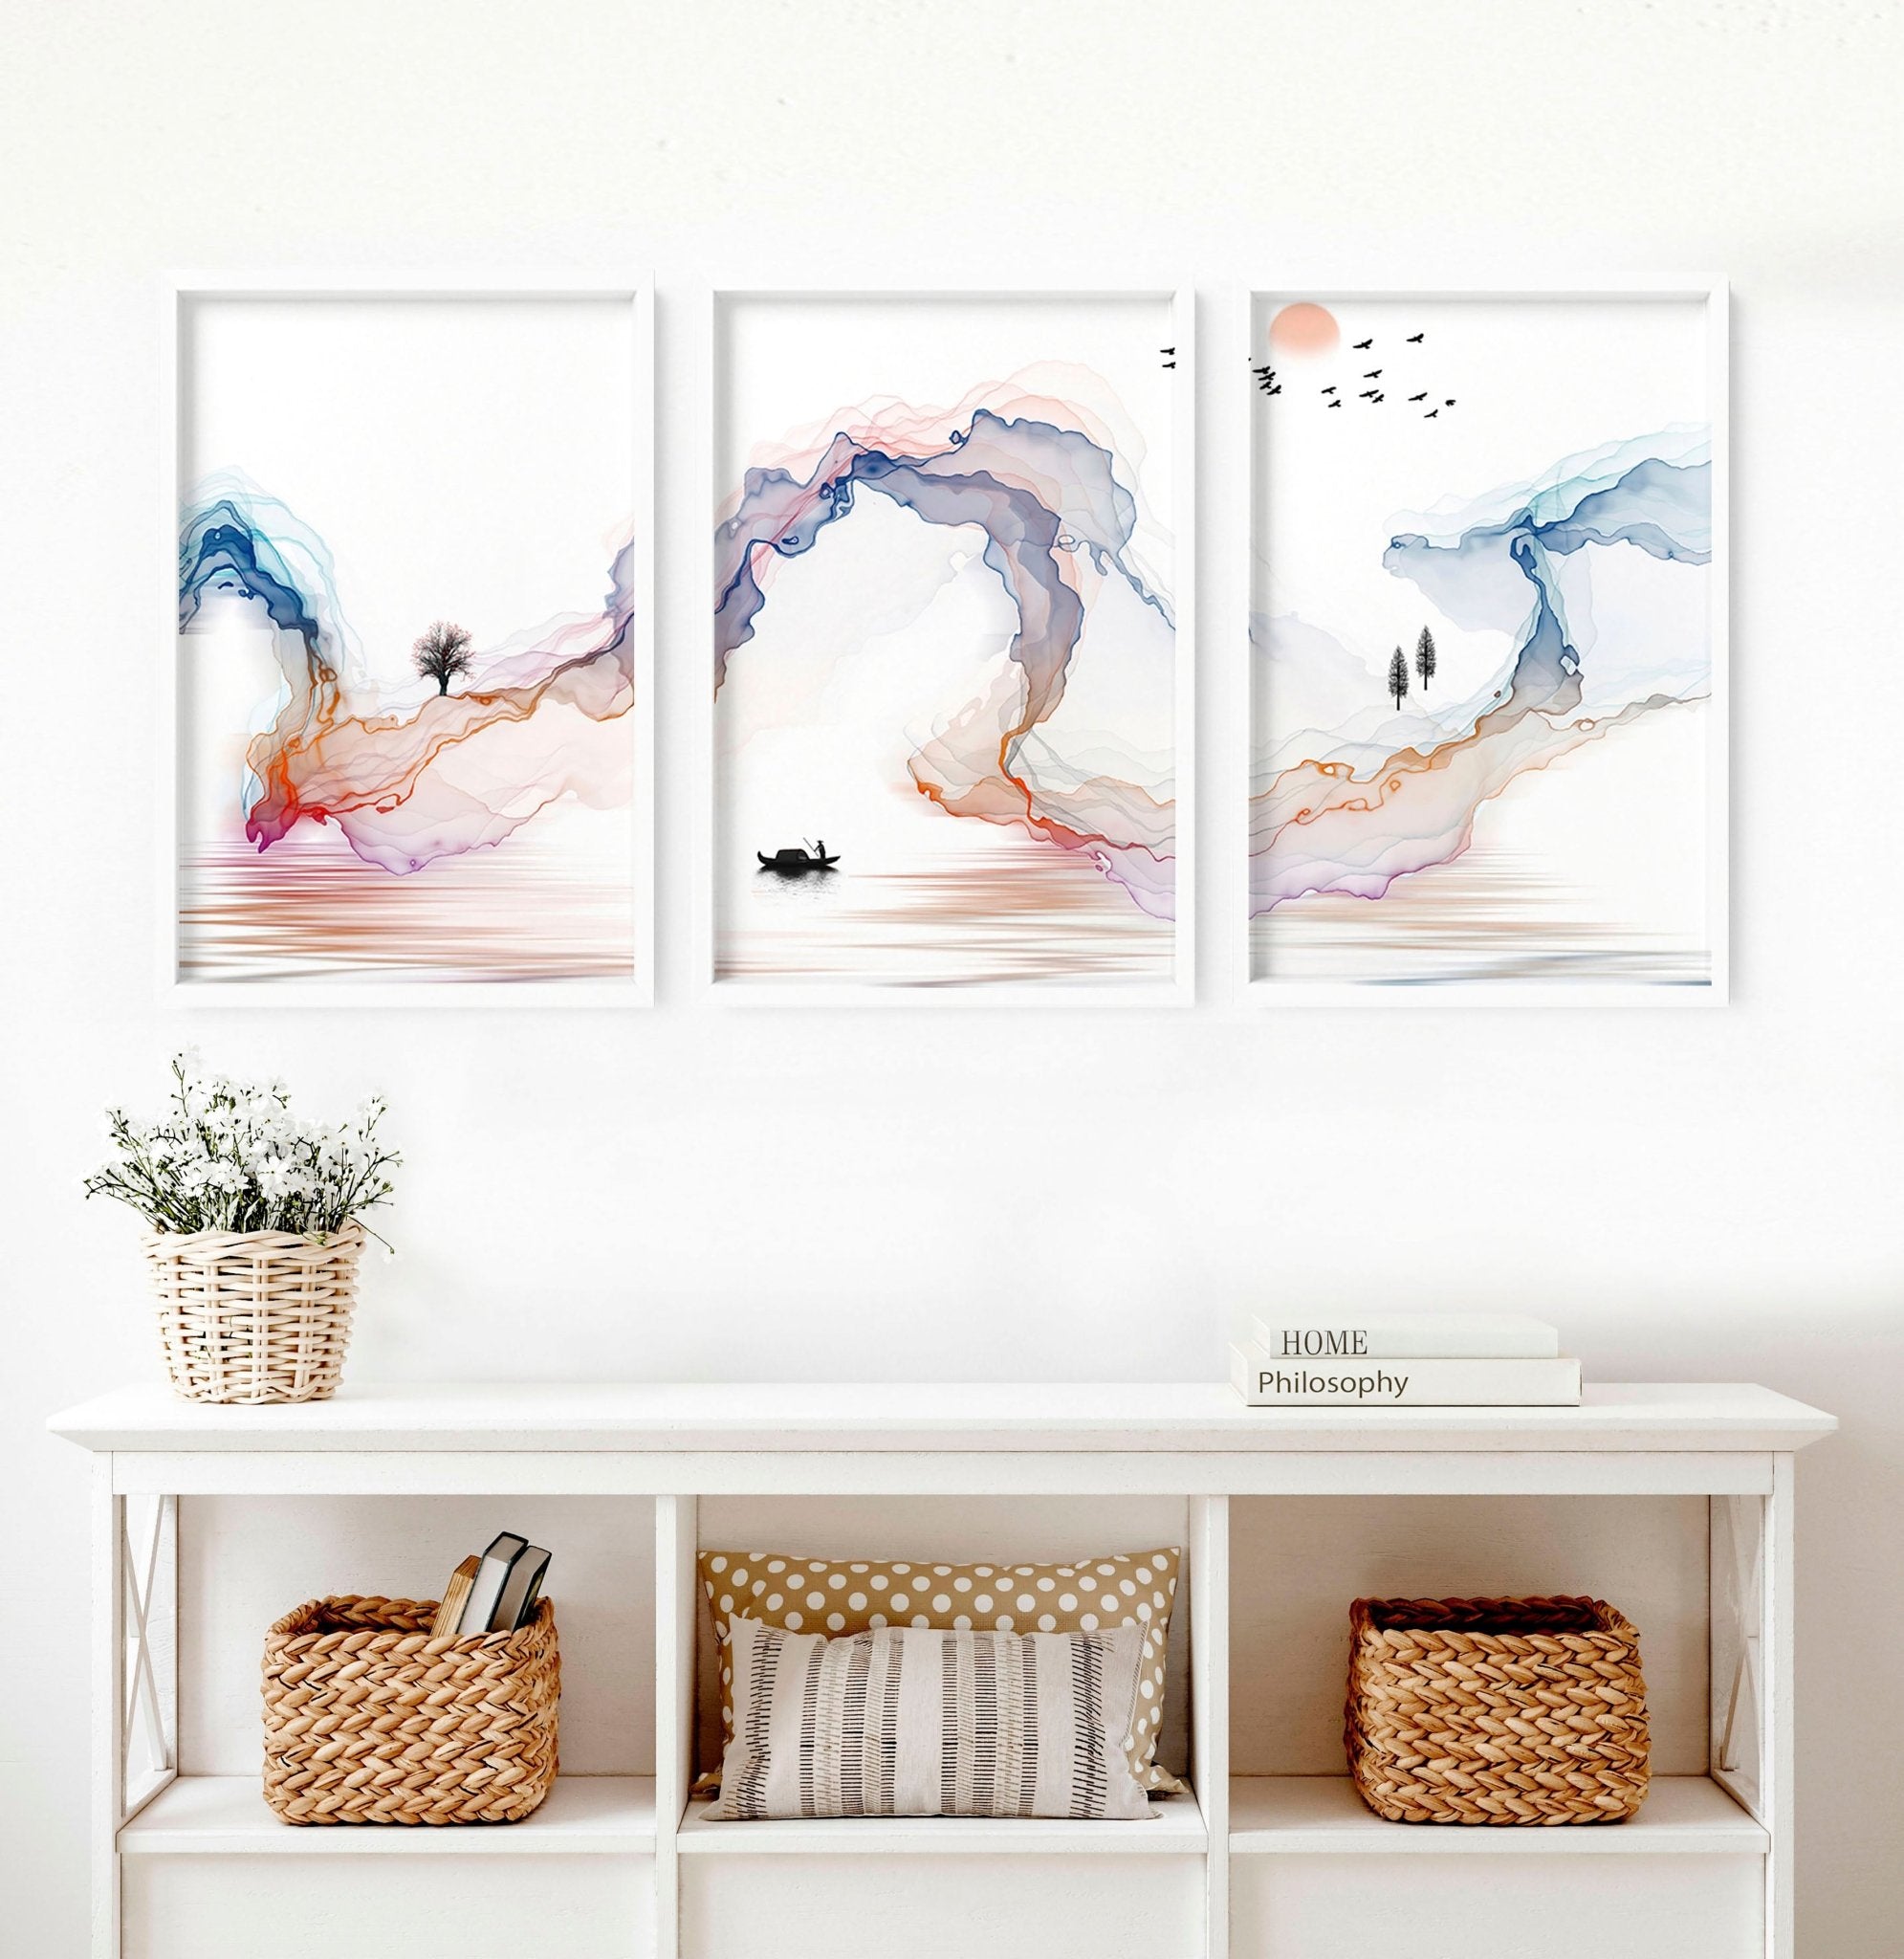 Calm wall art prints | set of 3 wall art prints - About Wall Art